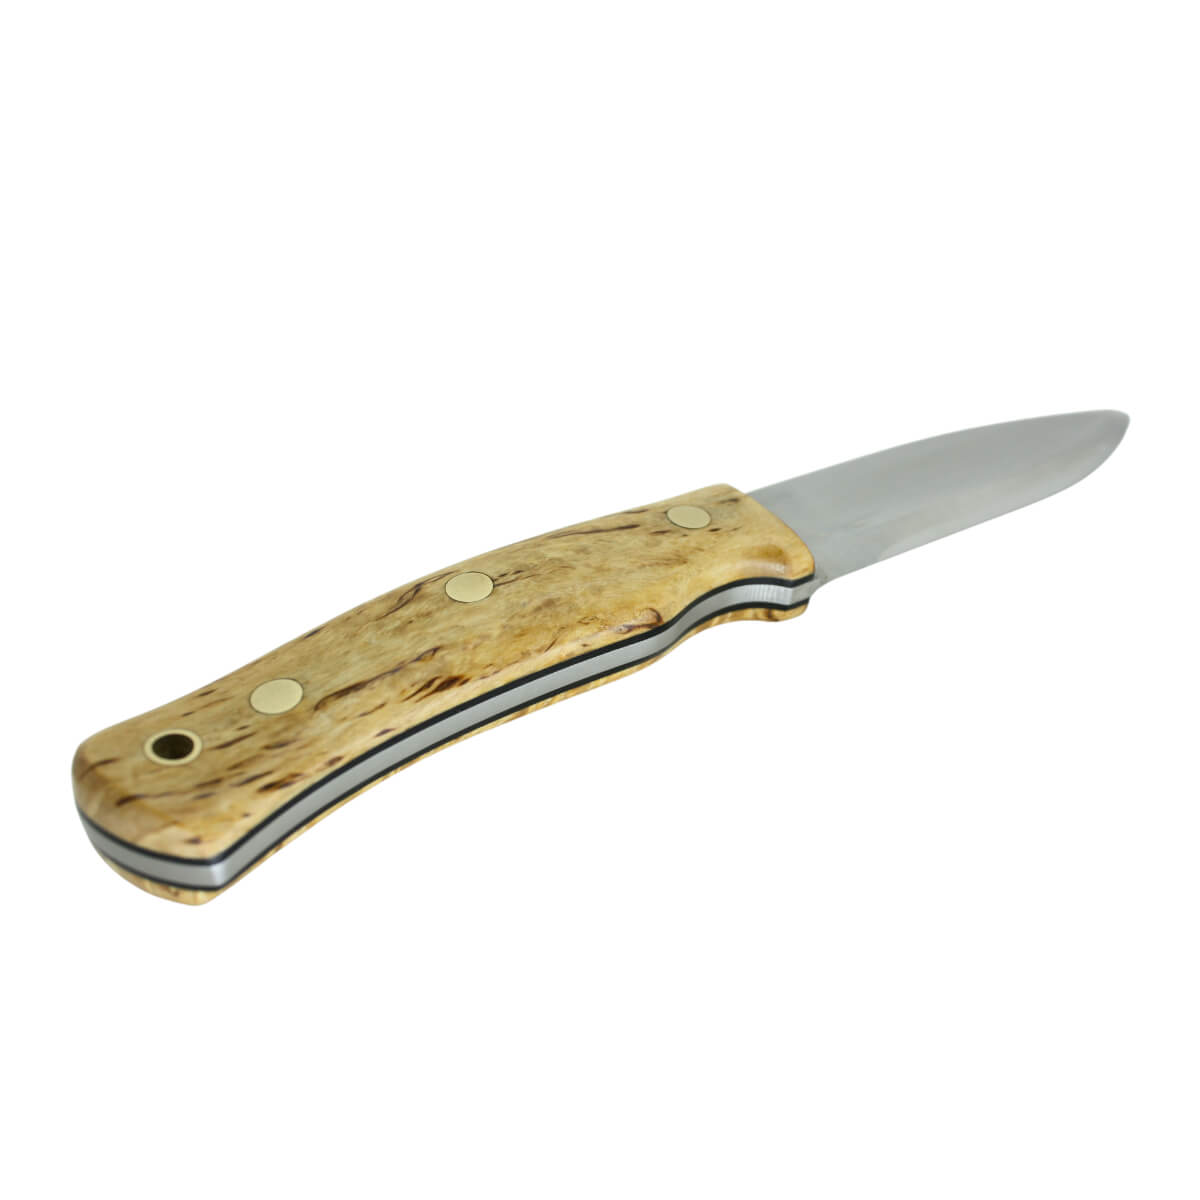 Casstrom No.10 Swedish Forest Knife, Curly Birch, bushcraft knife